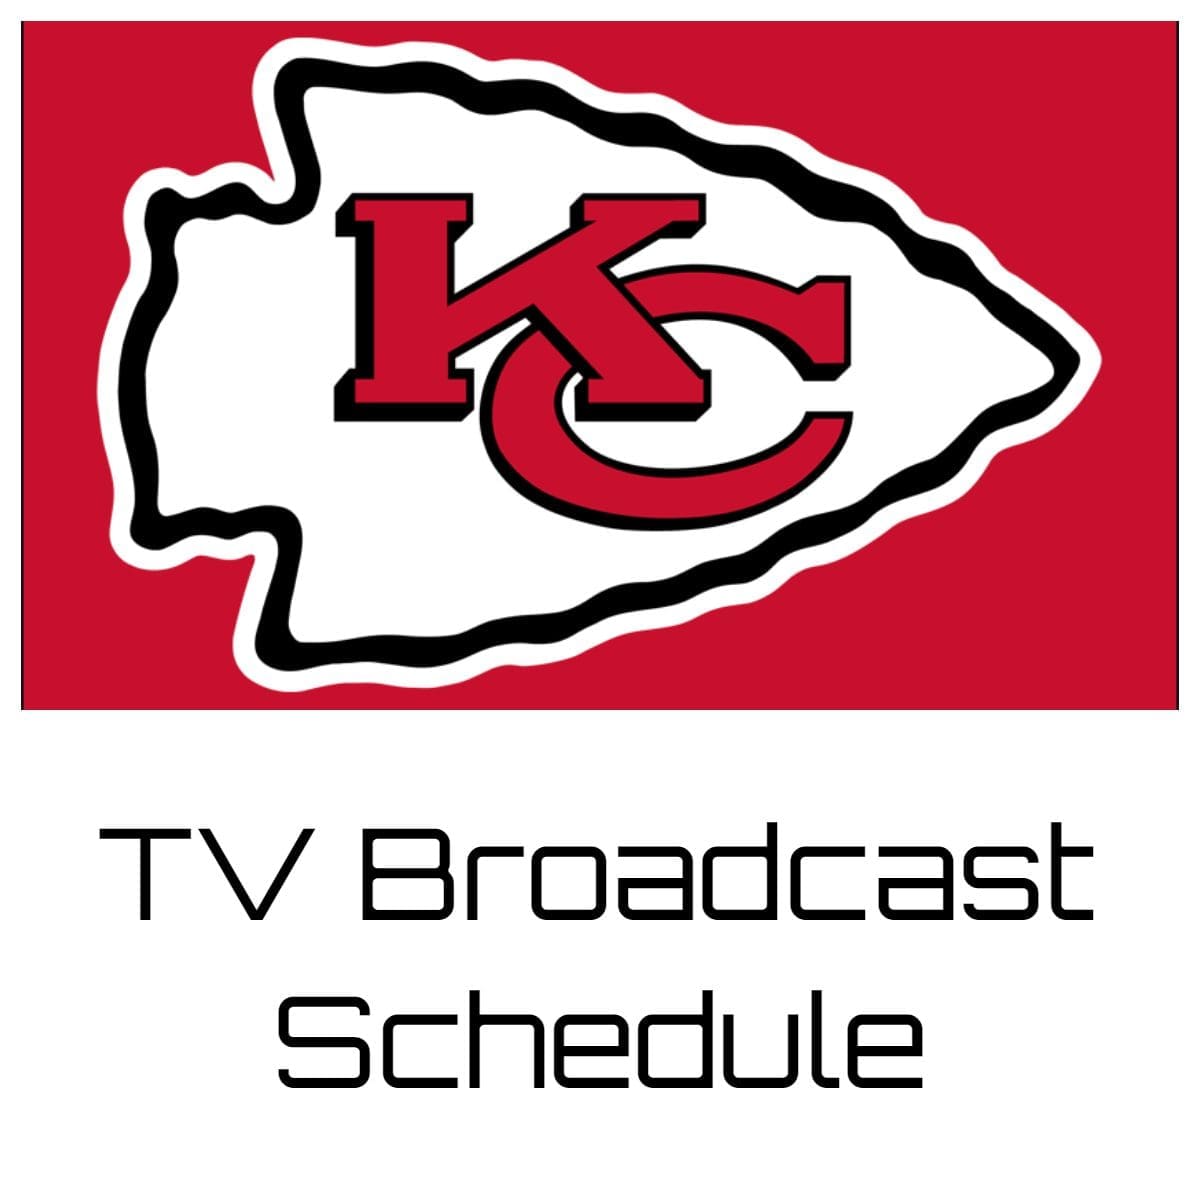 Kansas City Chiefs TV Broadcast Schedule